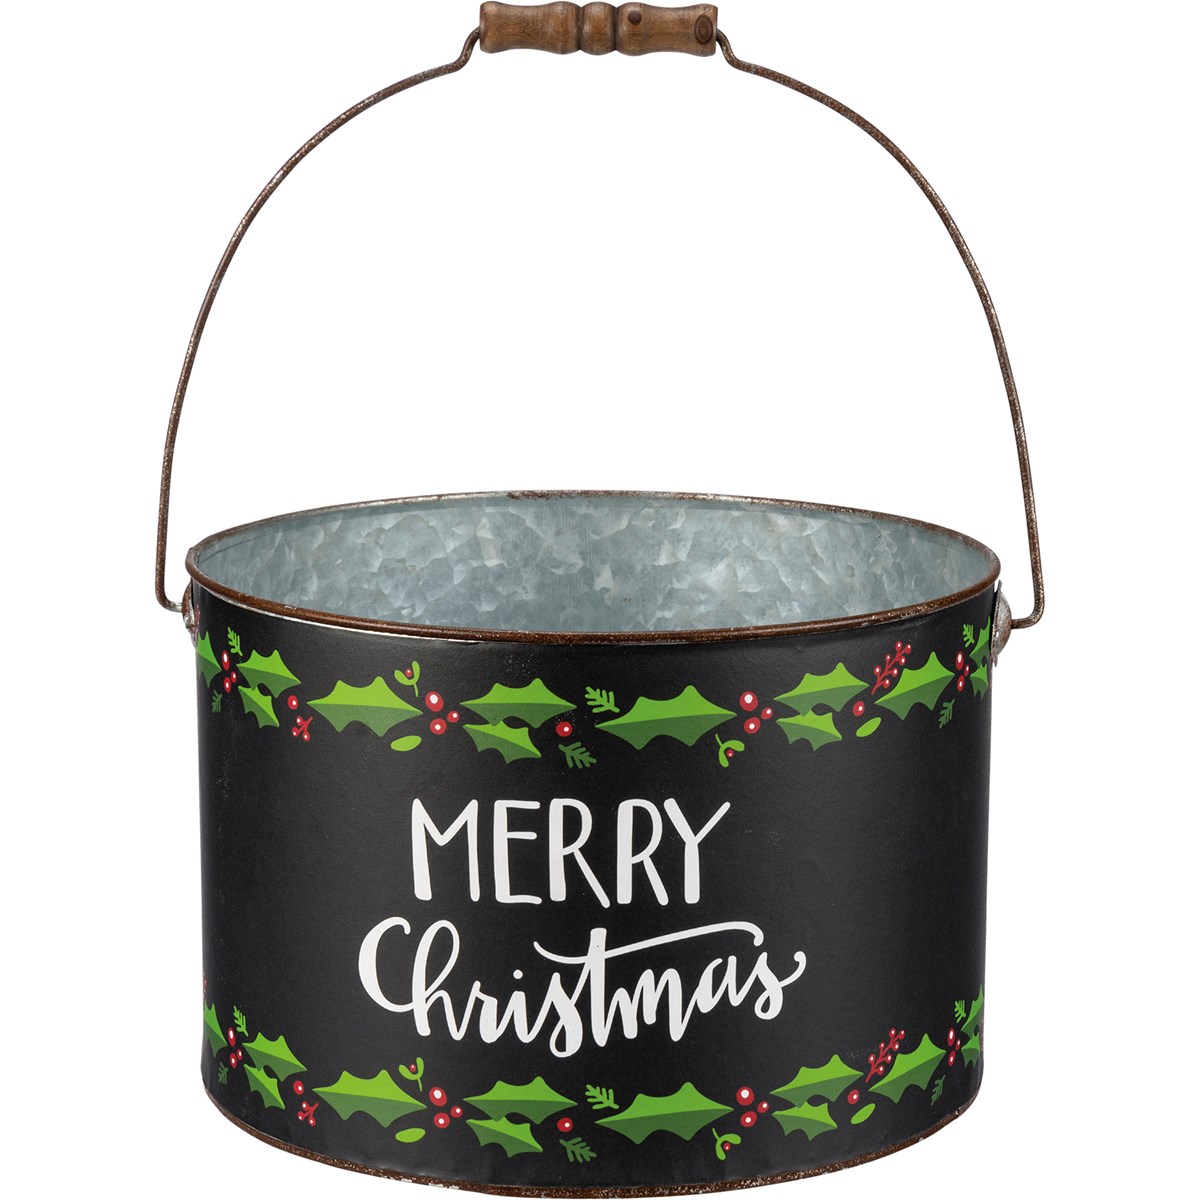 Merry Christmas Bucket Set - Metal, Paper, Wood